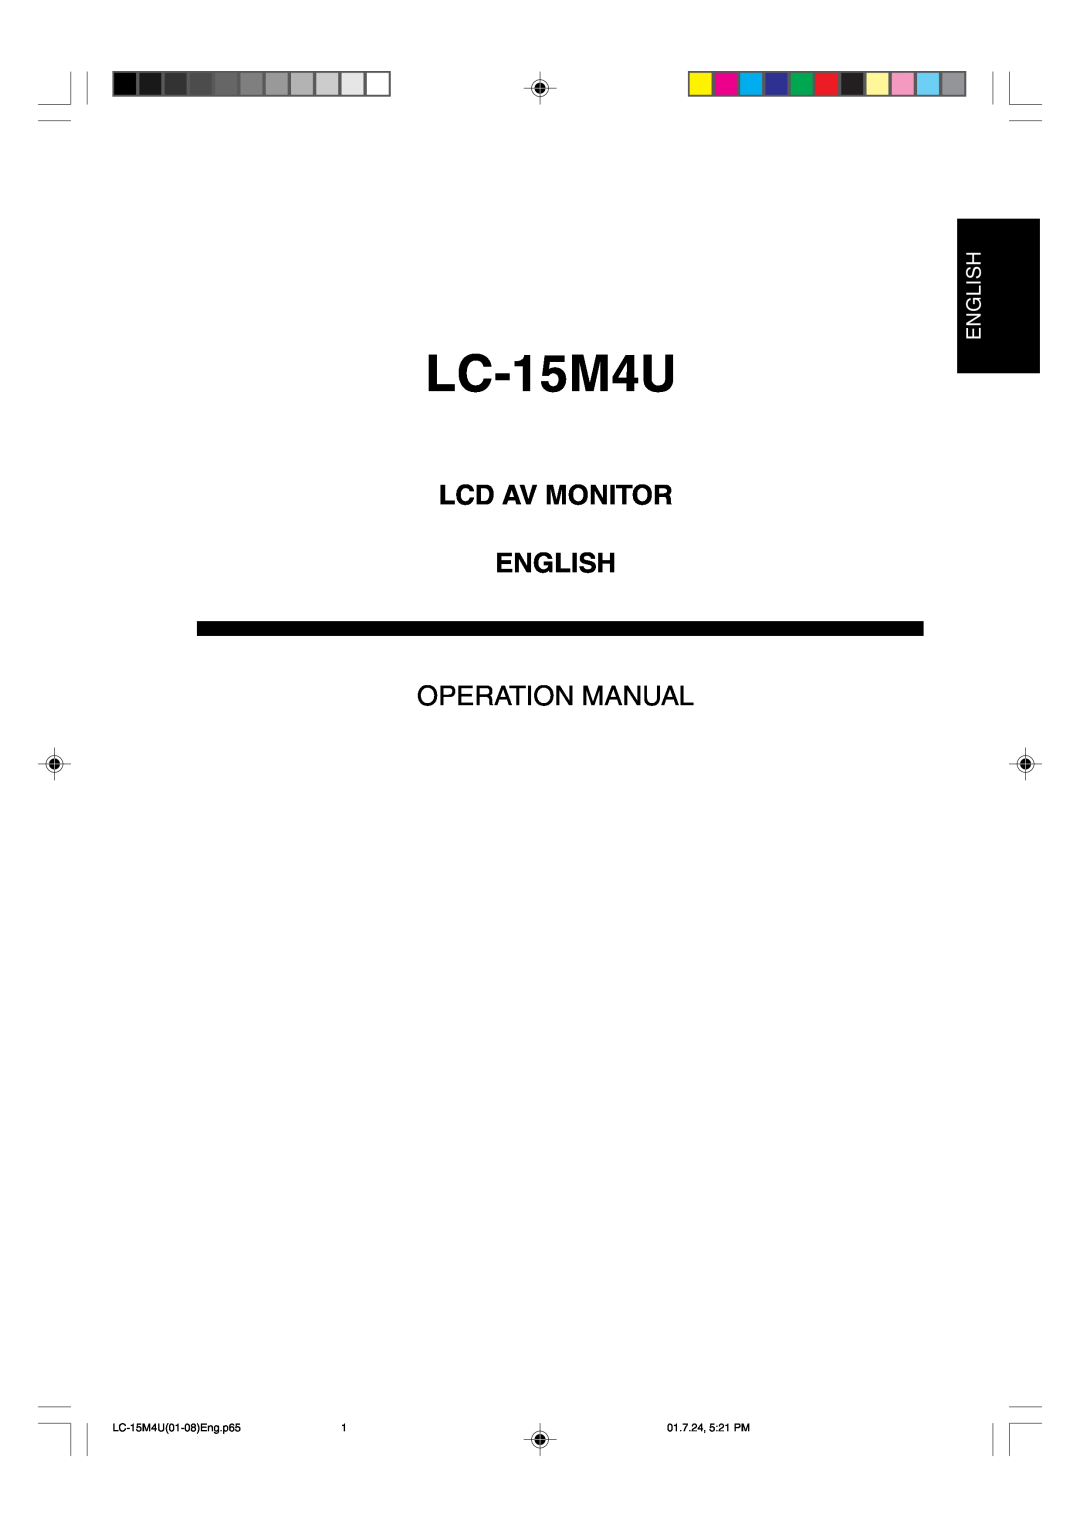 Sharp LC-15M4U operation manual Lcd Av Monitor English, Operation Manual 